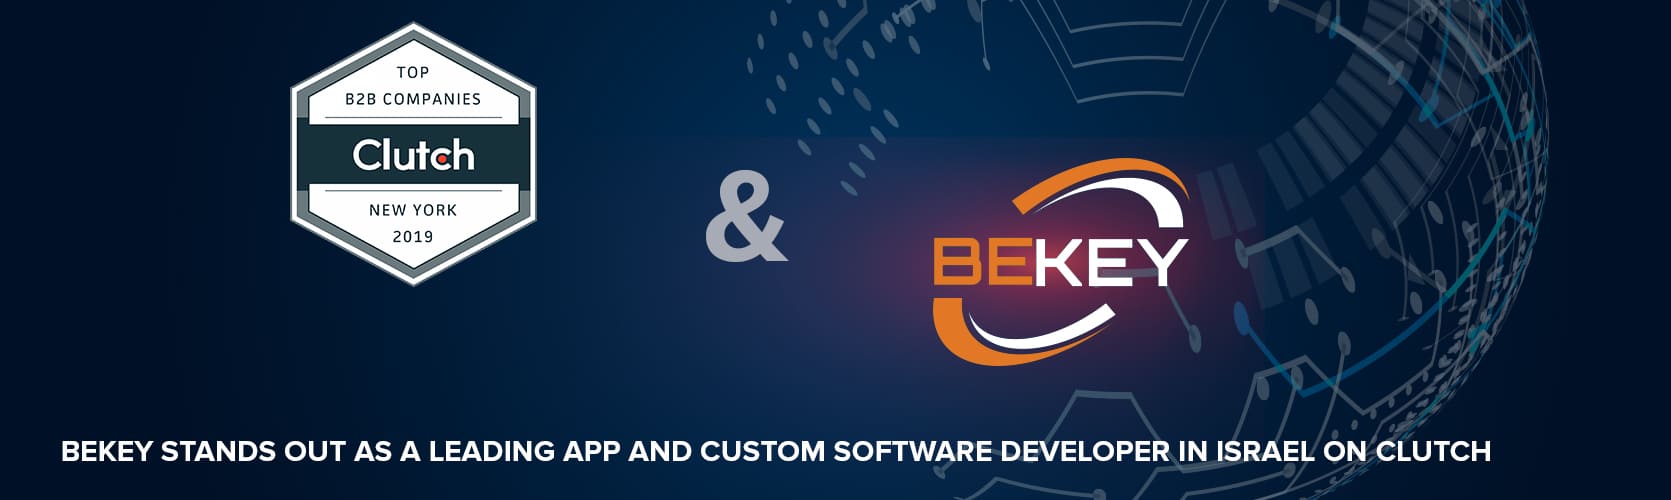 BeKey - Leading App and Custom Software Developer in Israel on Clutch